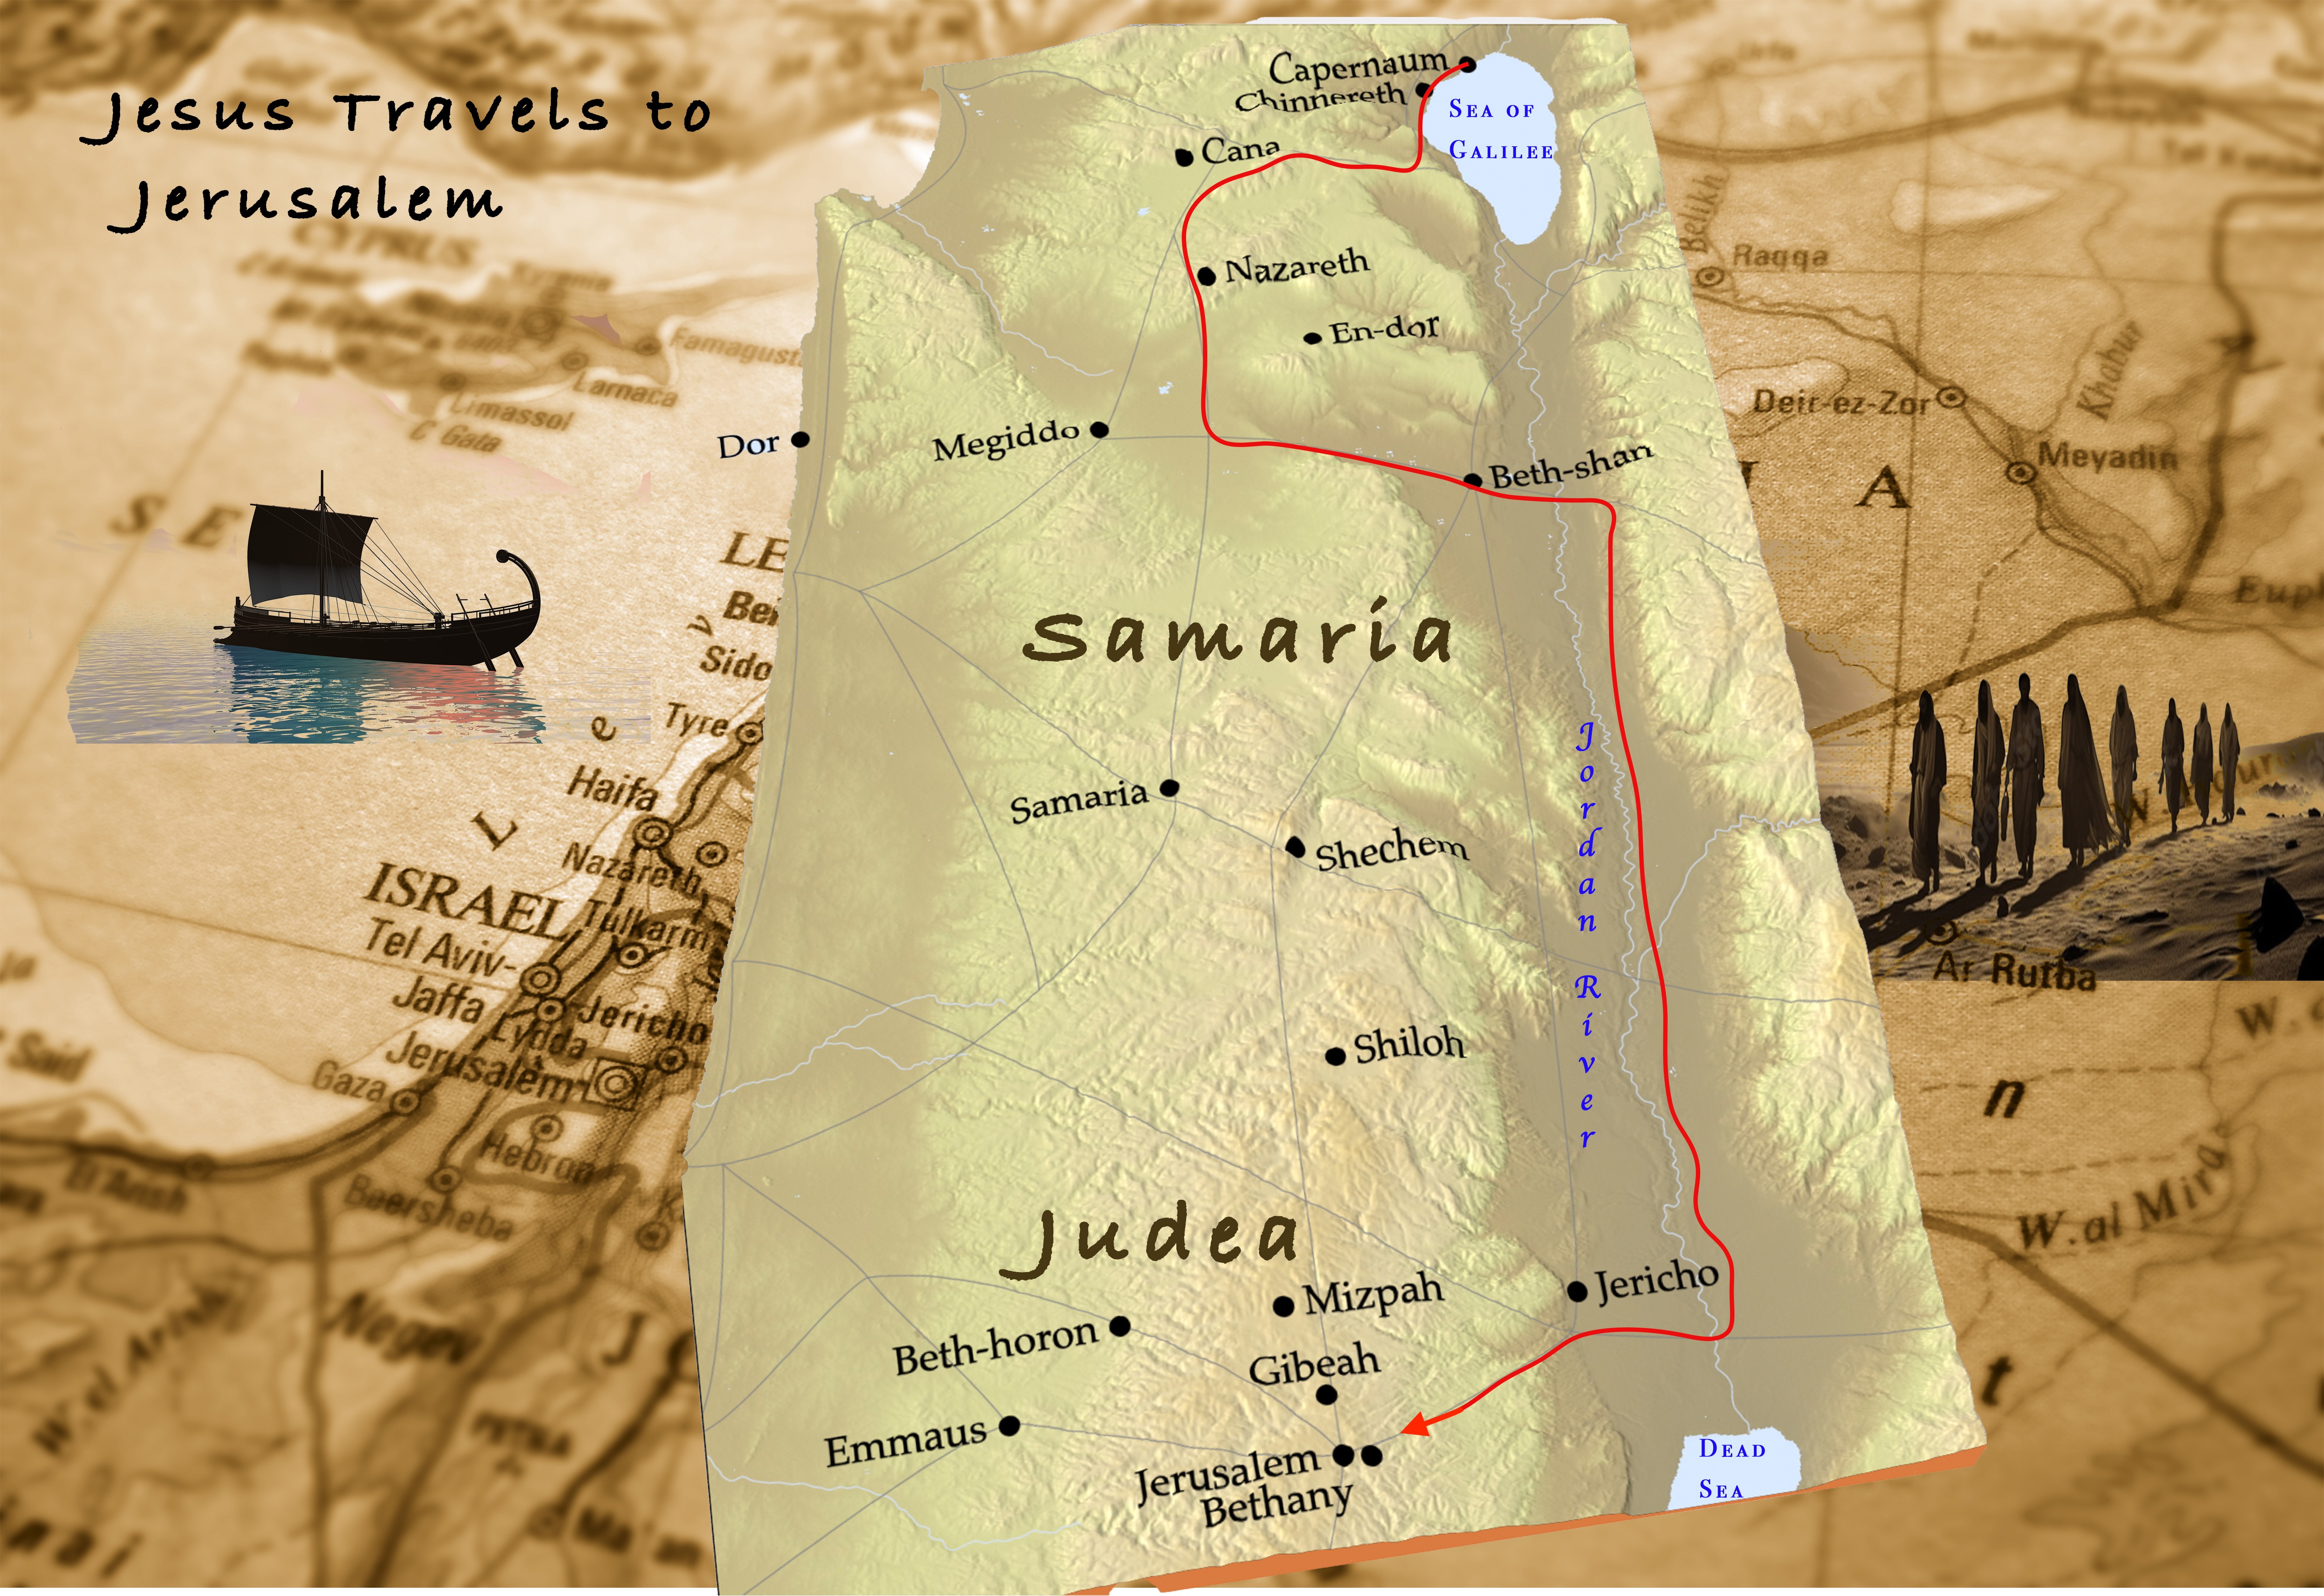 The route to Jerusalem avoiding Samaria. 